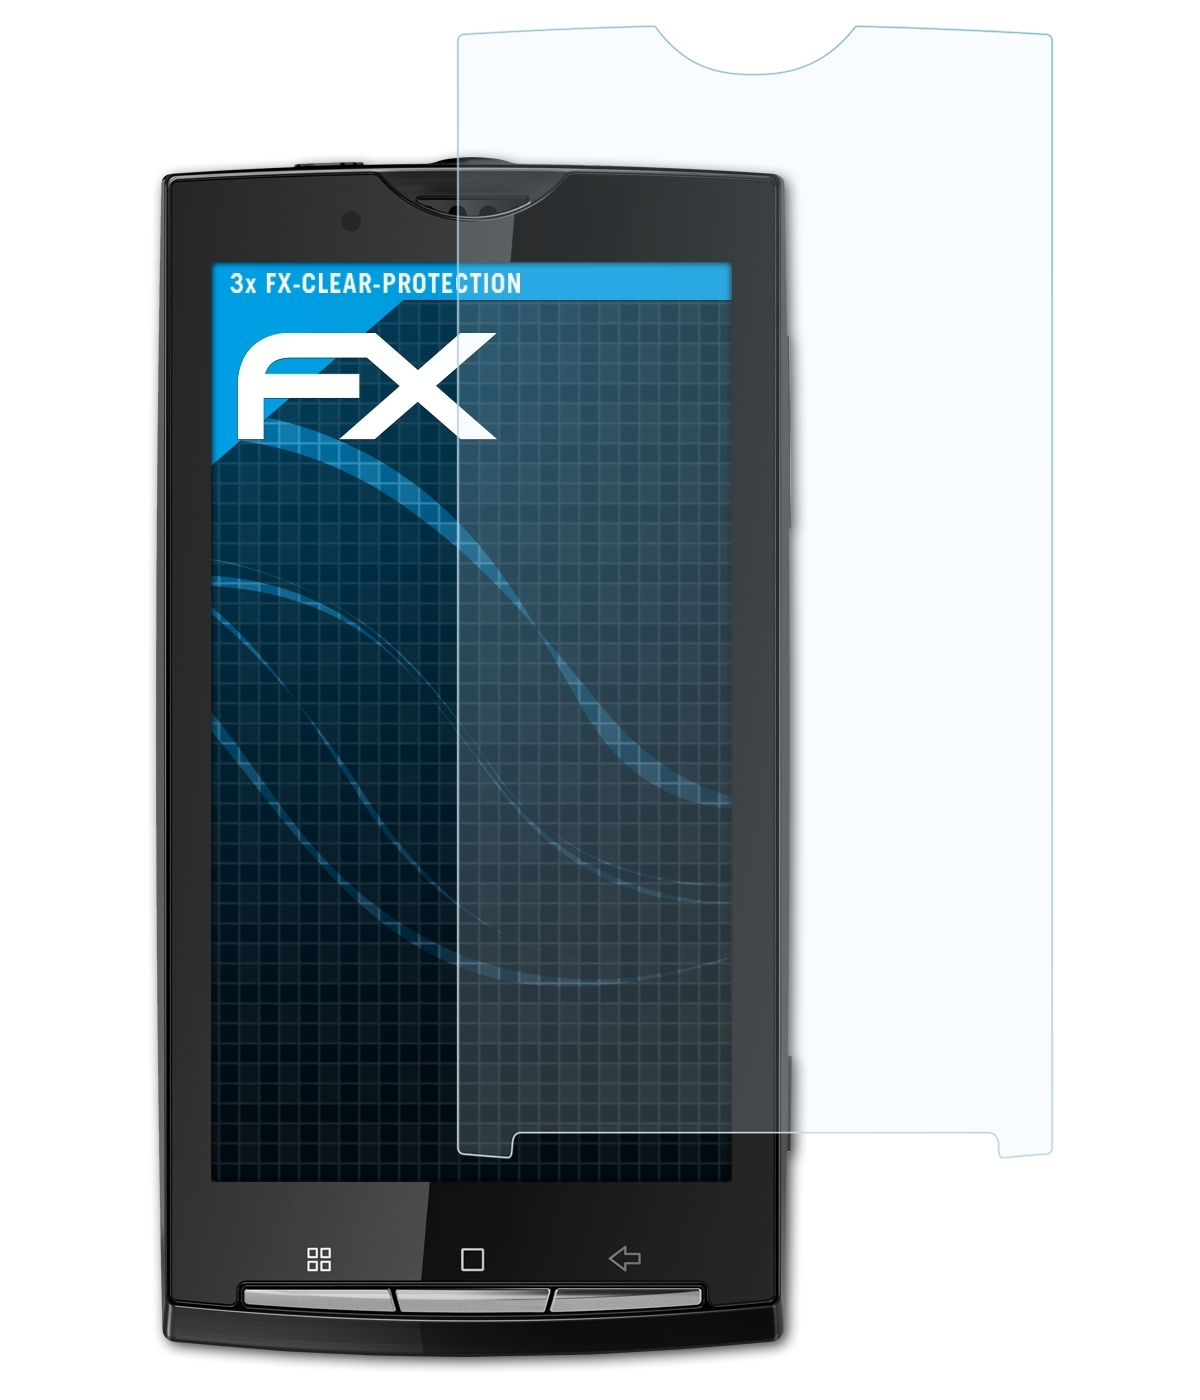 3x Displayschutz(für X10) Sony-Ericsson FX-Clear ATFOLIX Xperia